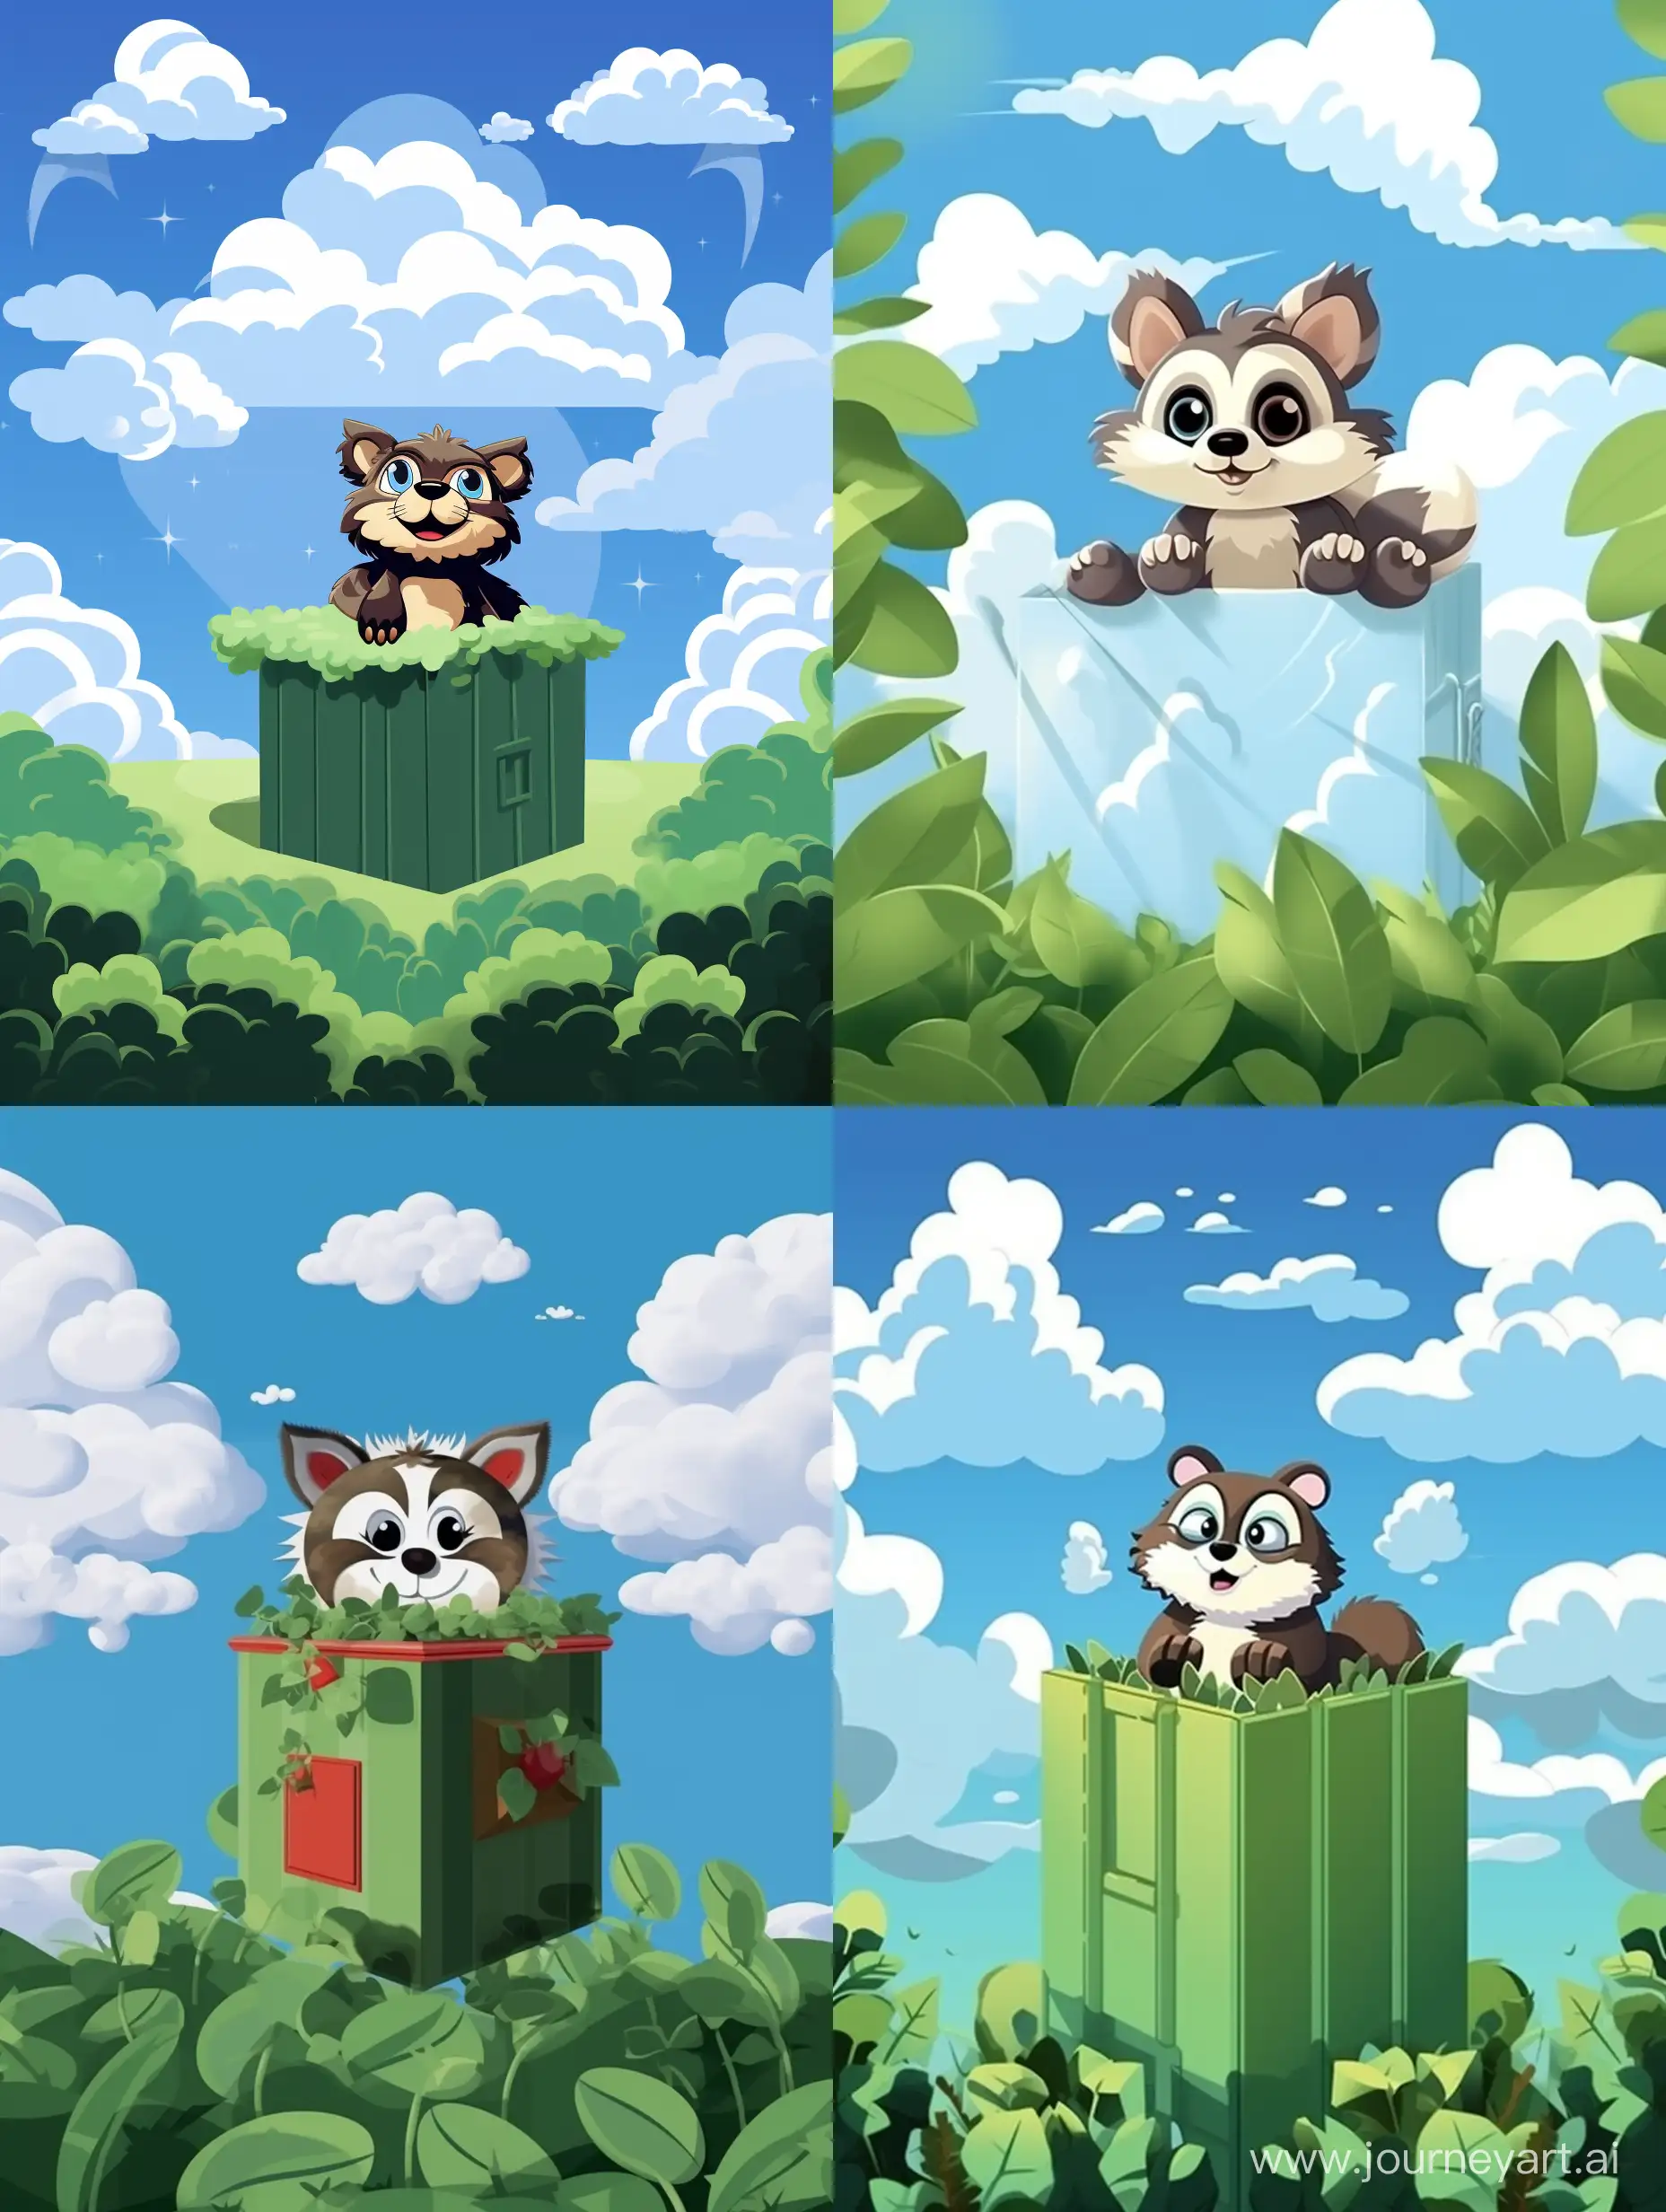 Whimsical-Flying-Raccoon-Adventure-Over-Town-Garden